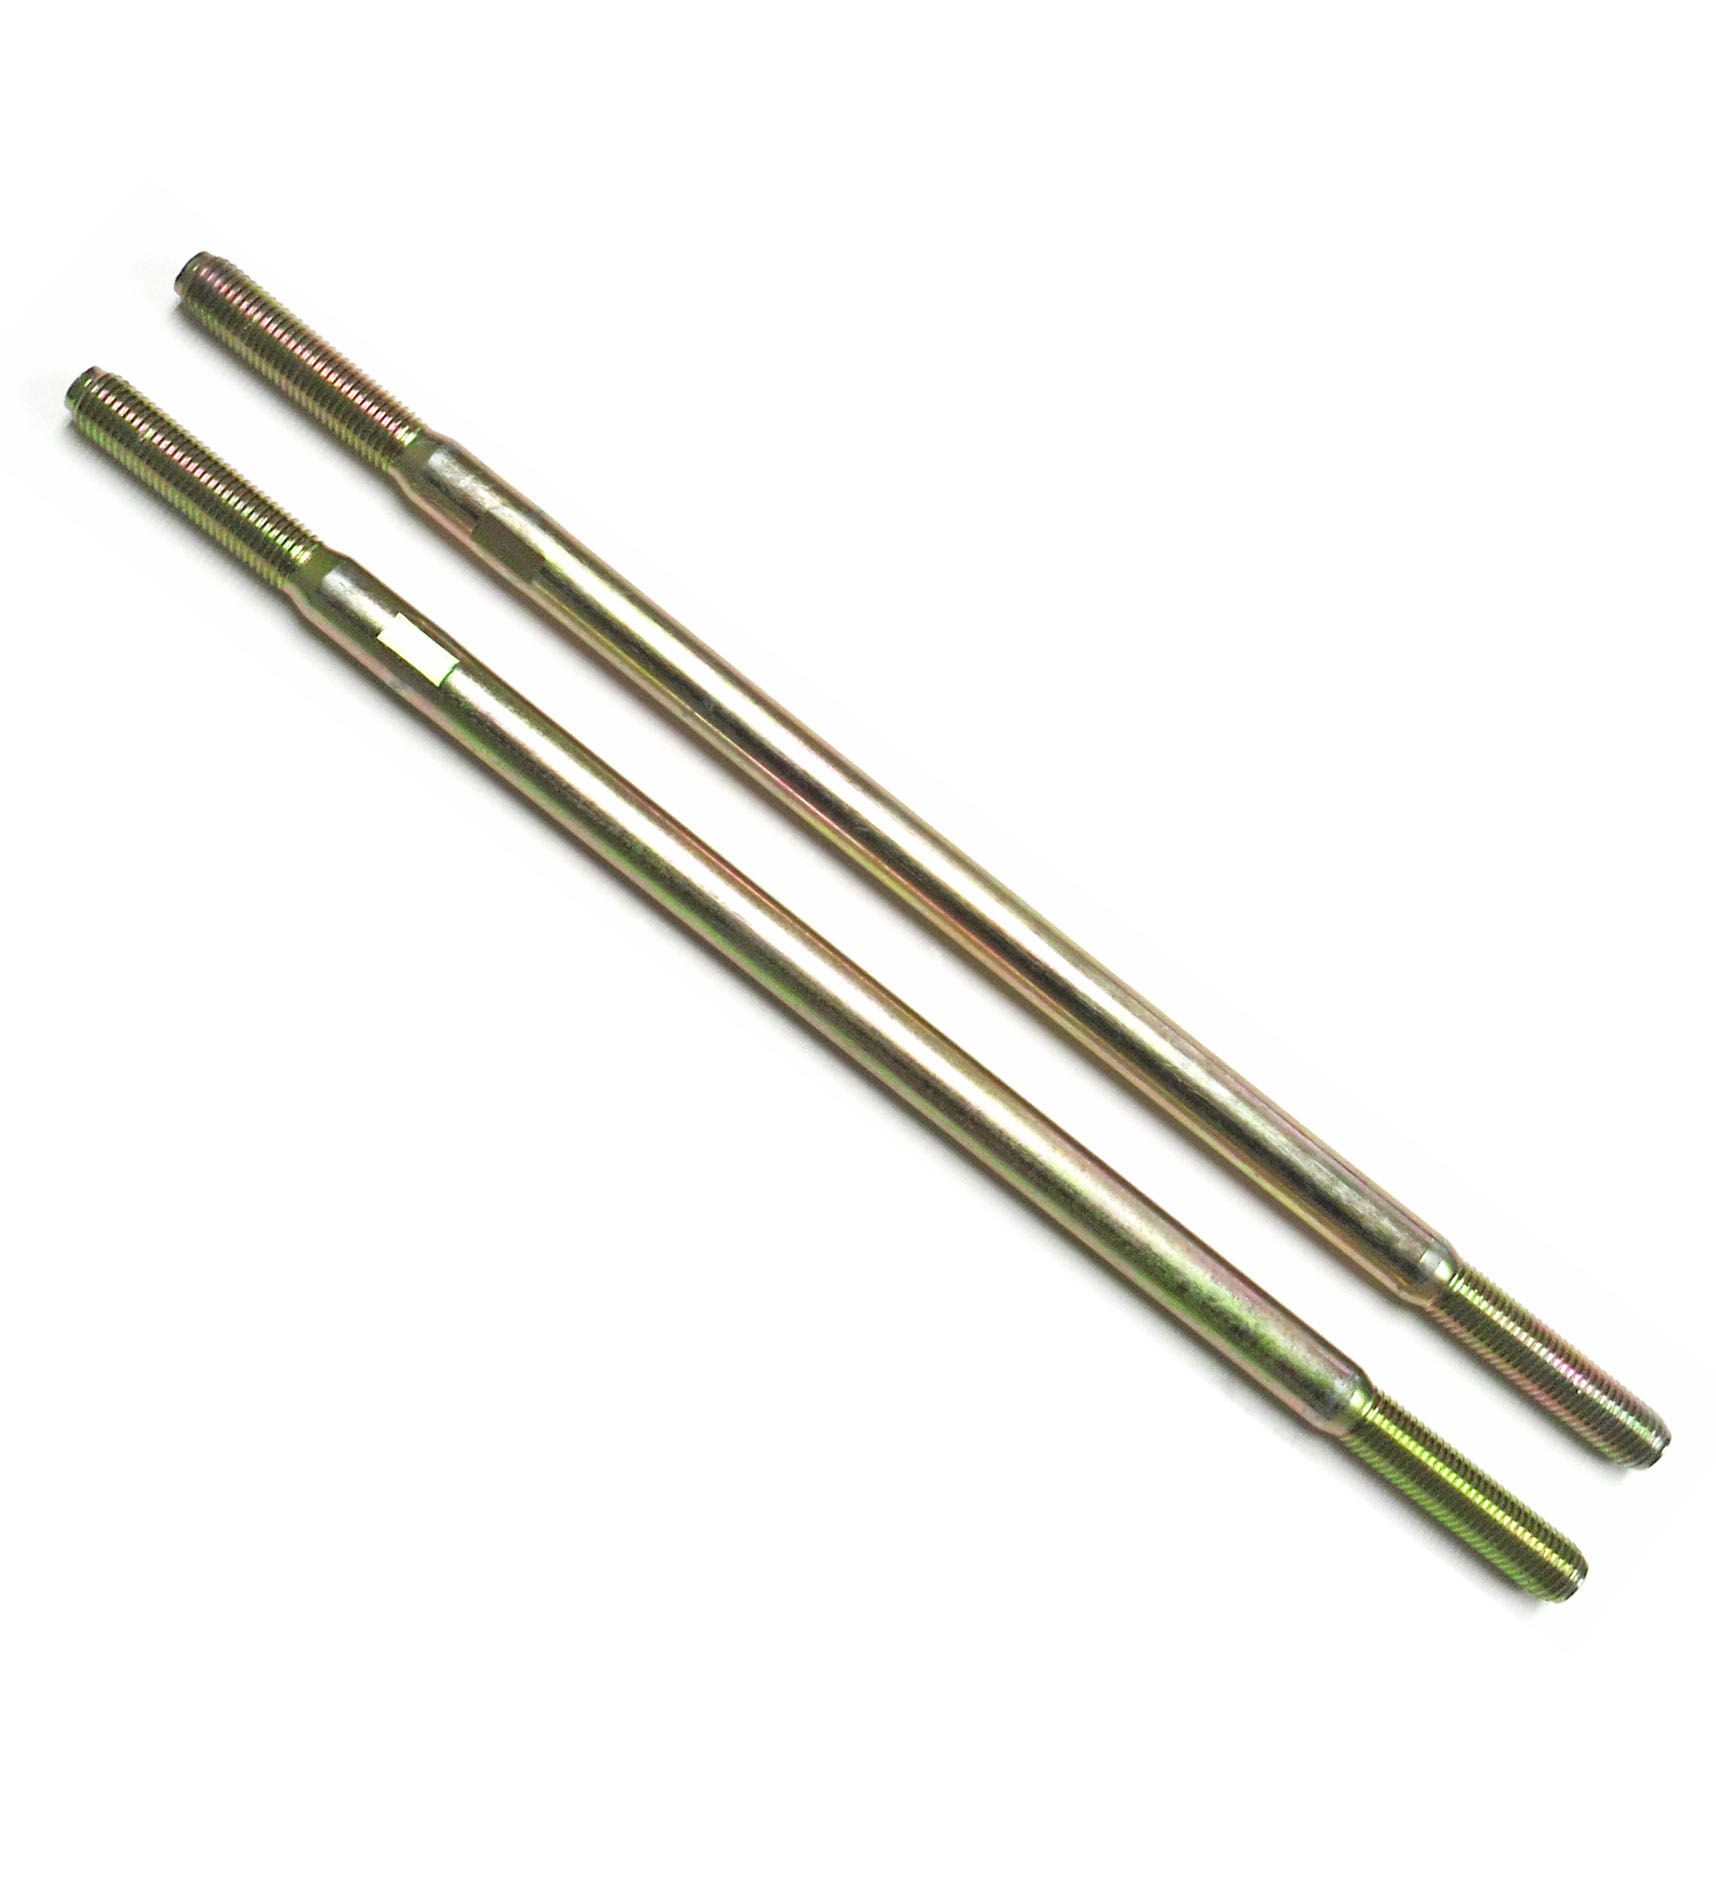 Tie Rod Set (Left Hand & Right Hand Thread) Rod Threads=10mm Thread Pitch=1.25mm Tie Rod end to end=10 7/8" (276mm)